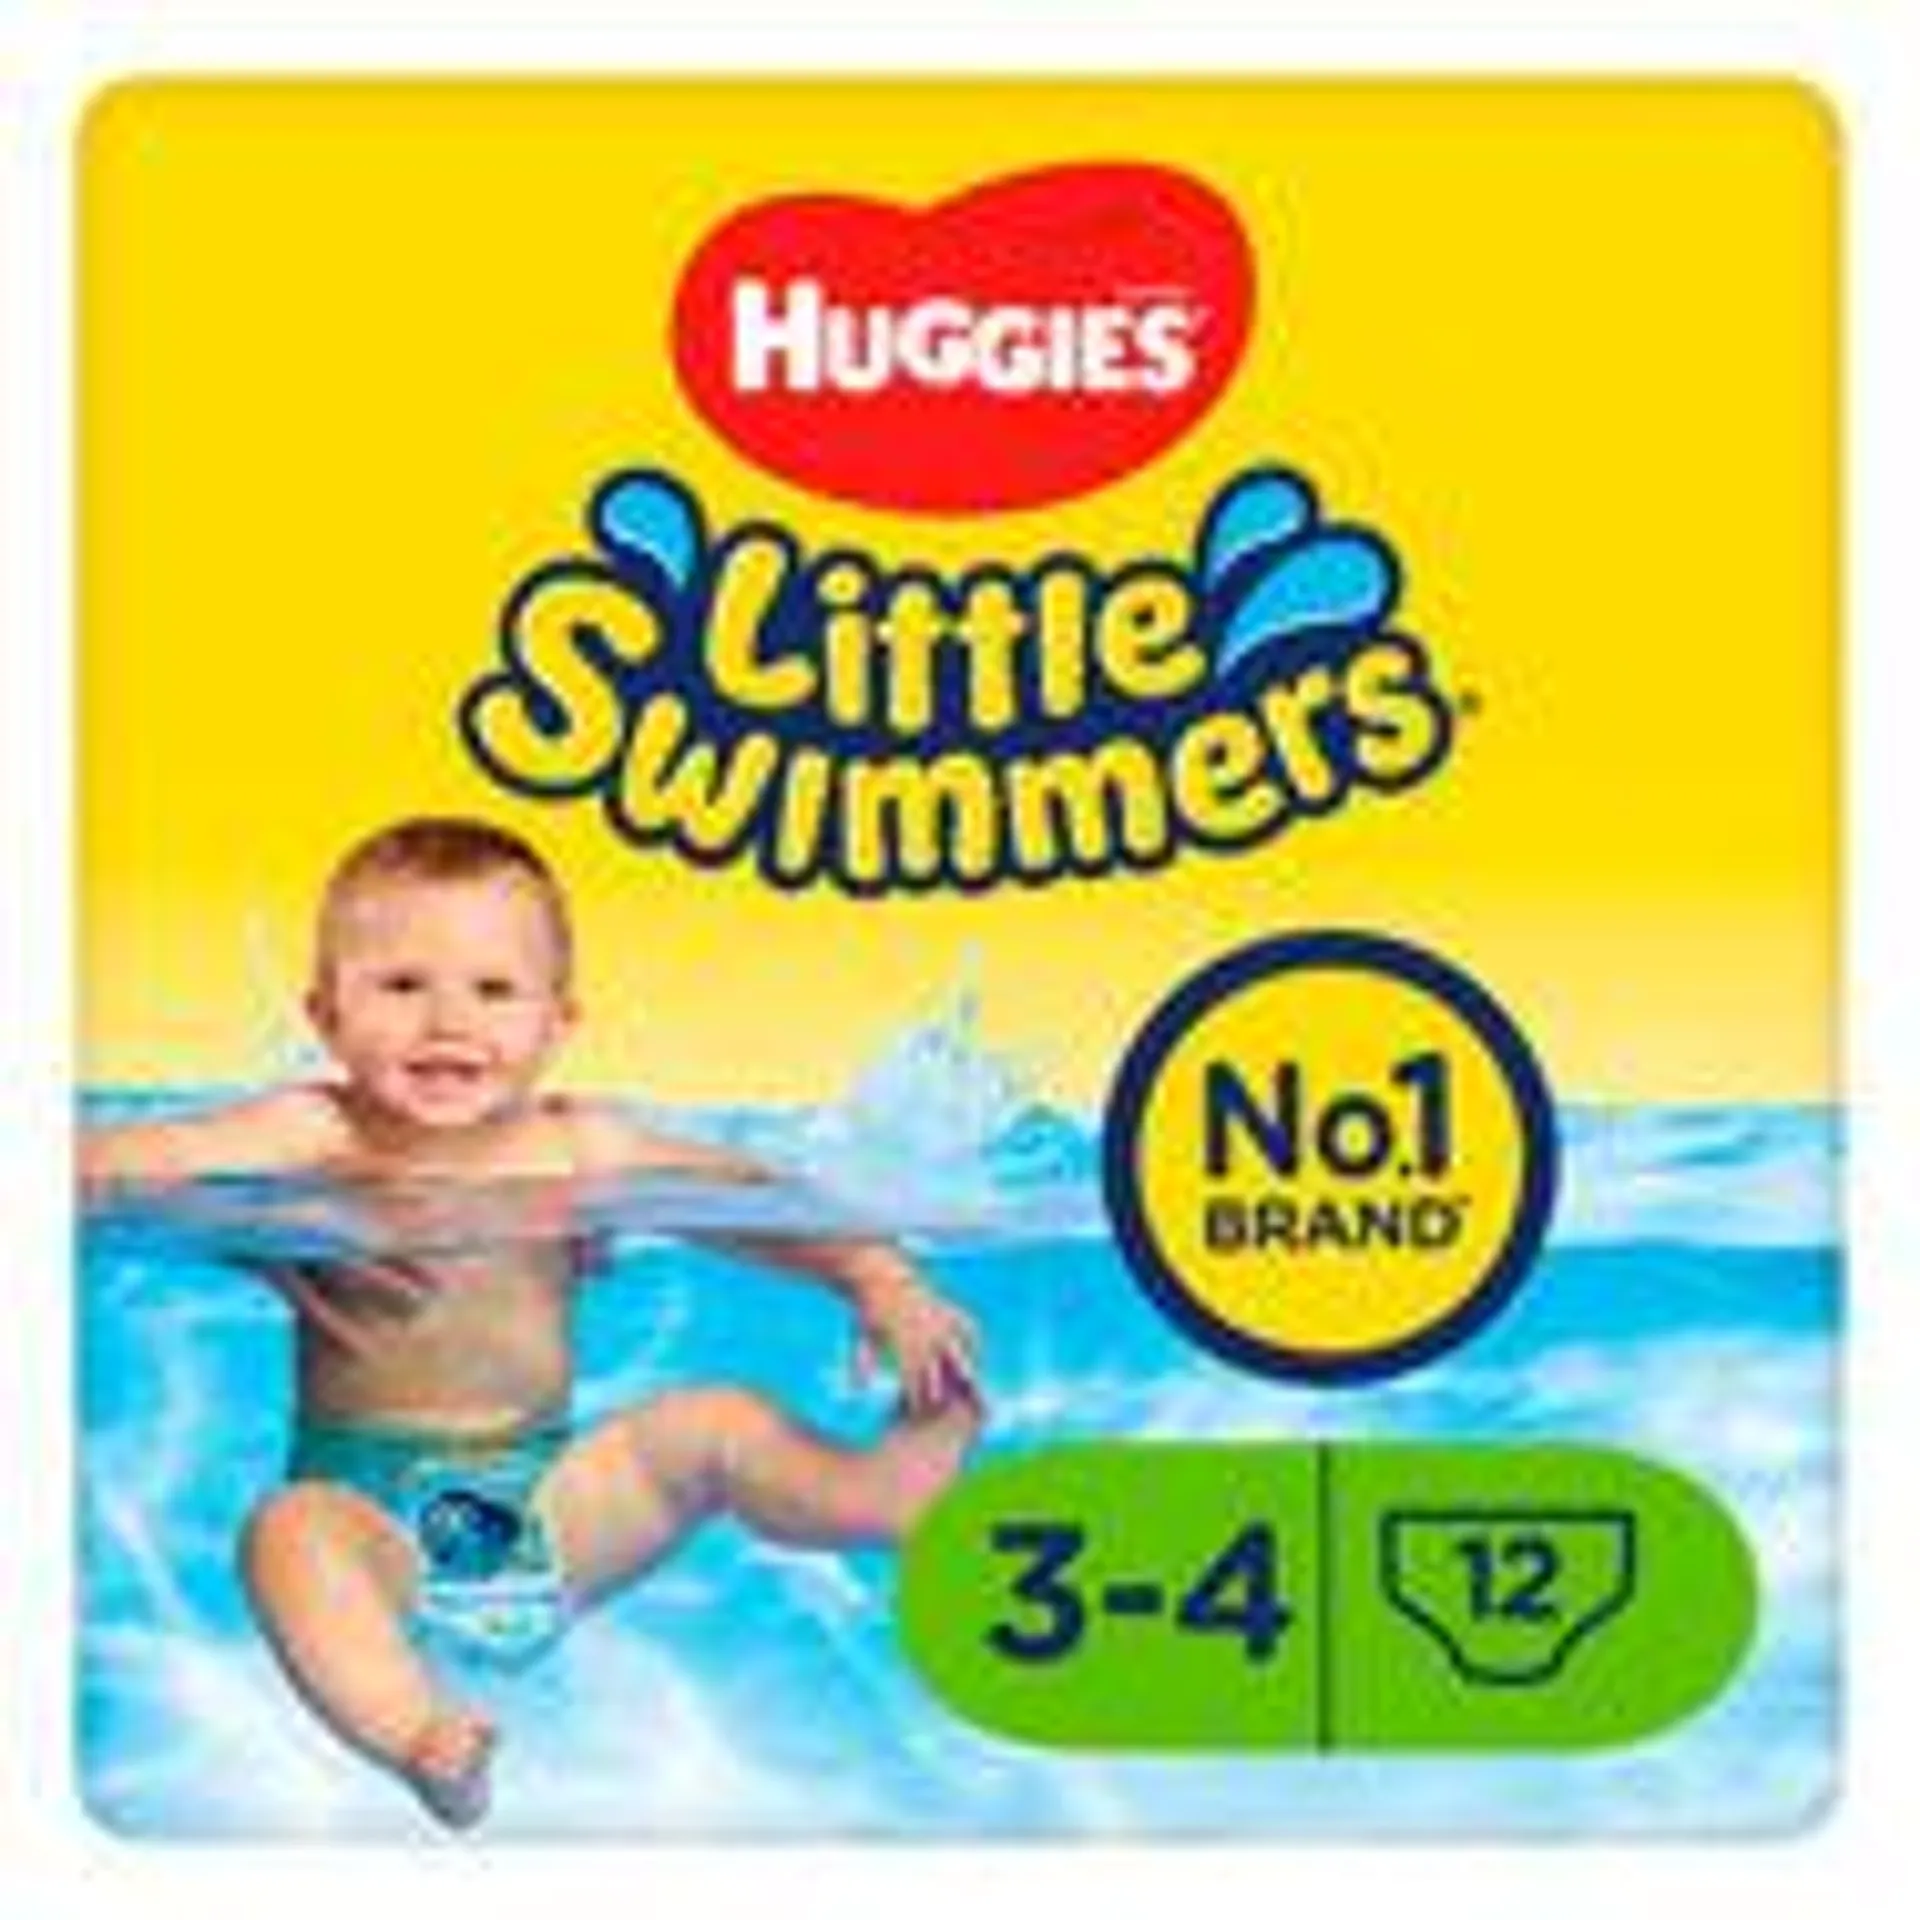 Huggies Little Swimmers Size 3-4 Swim Nappies